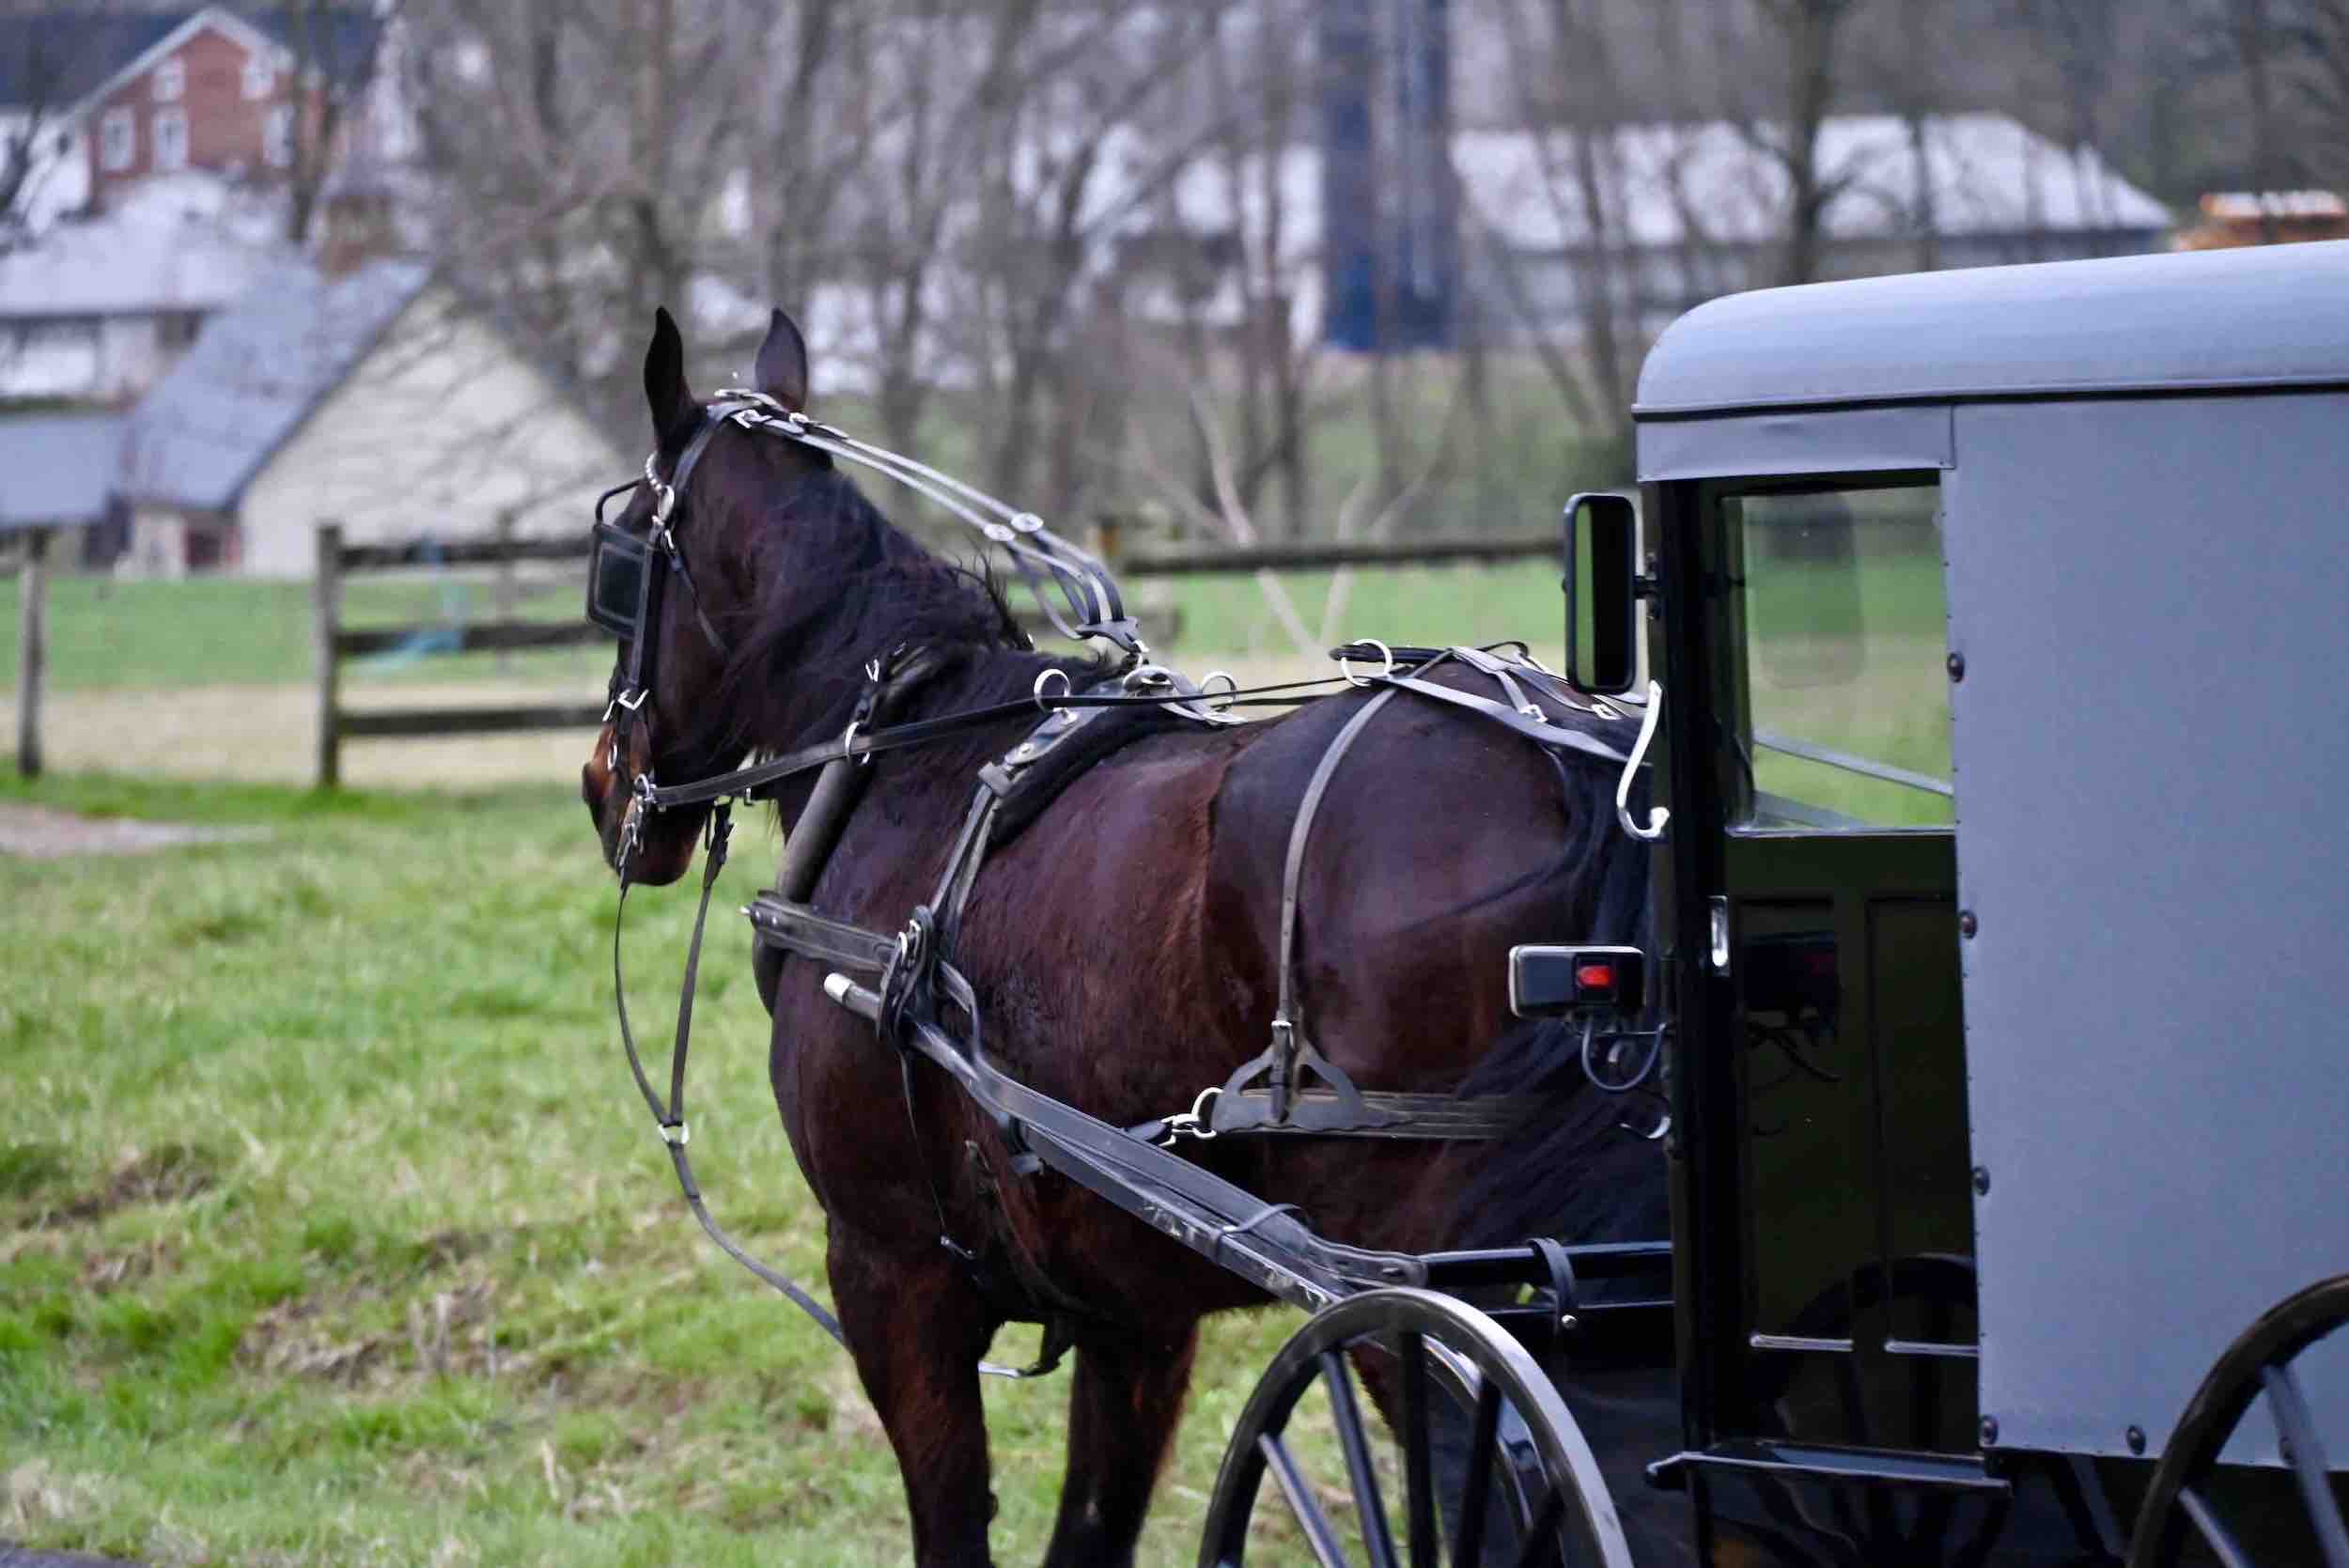 A horse and a wagon on an Amish farm.